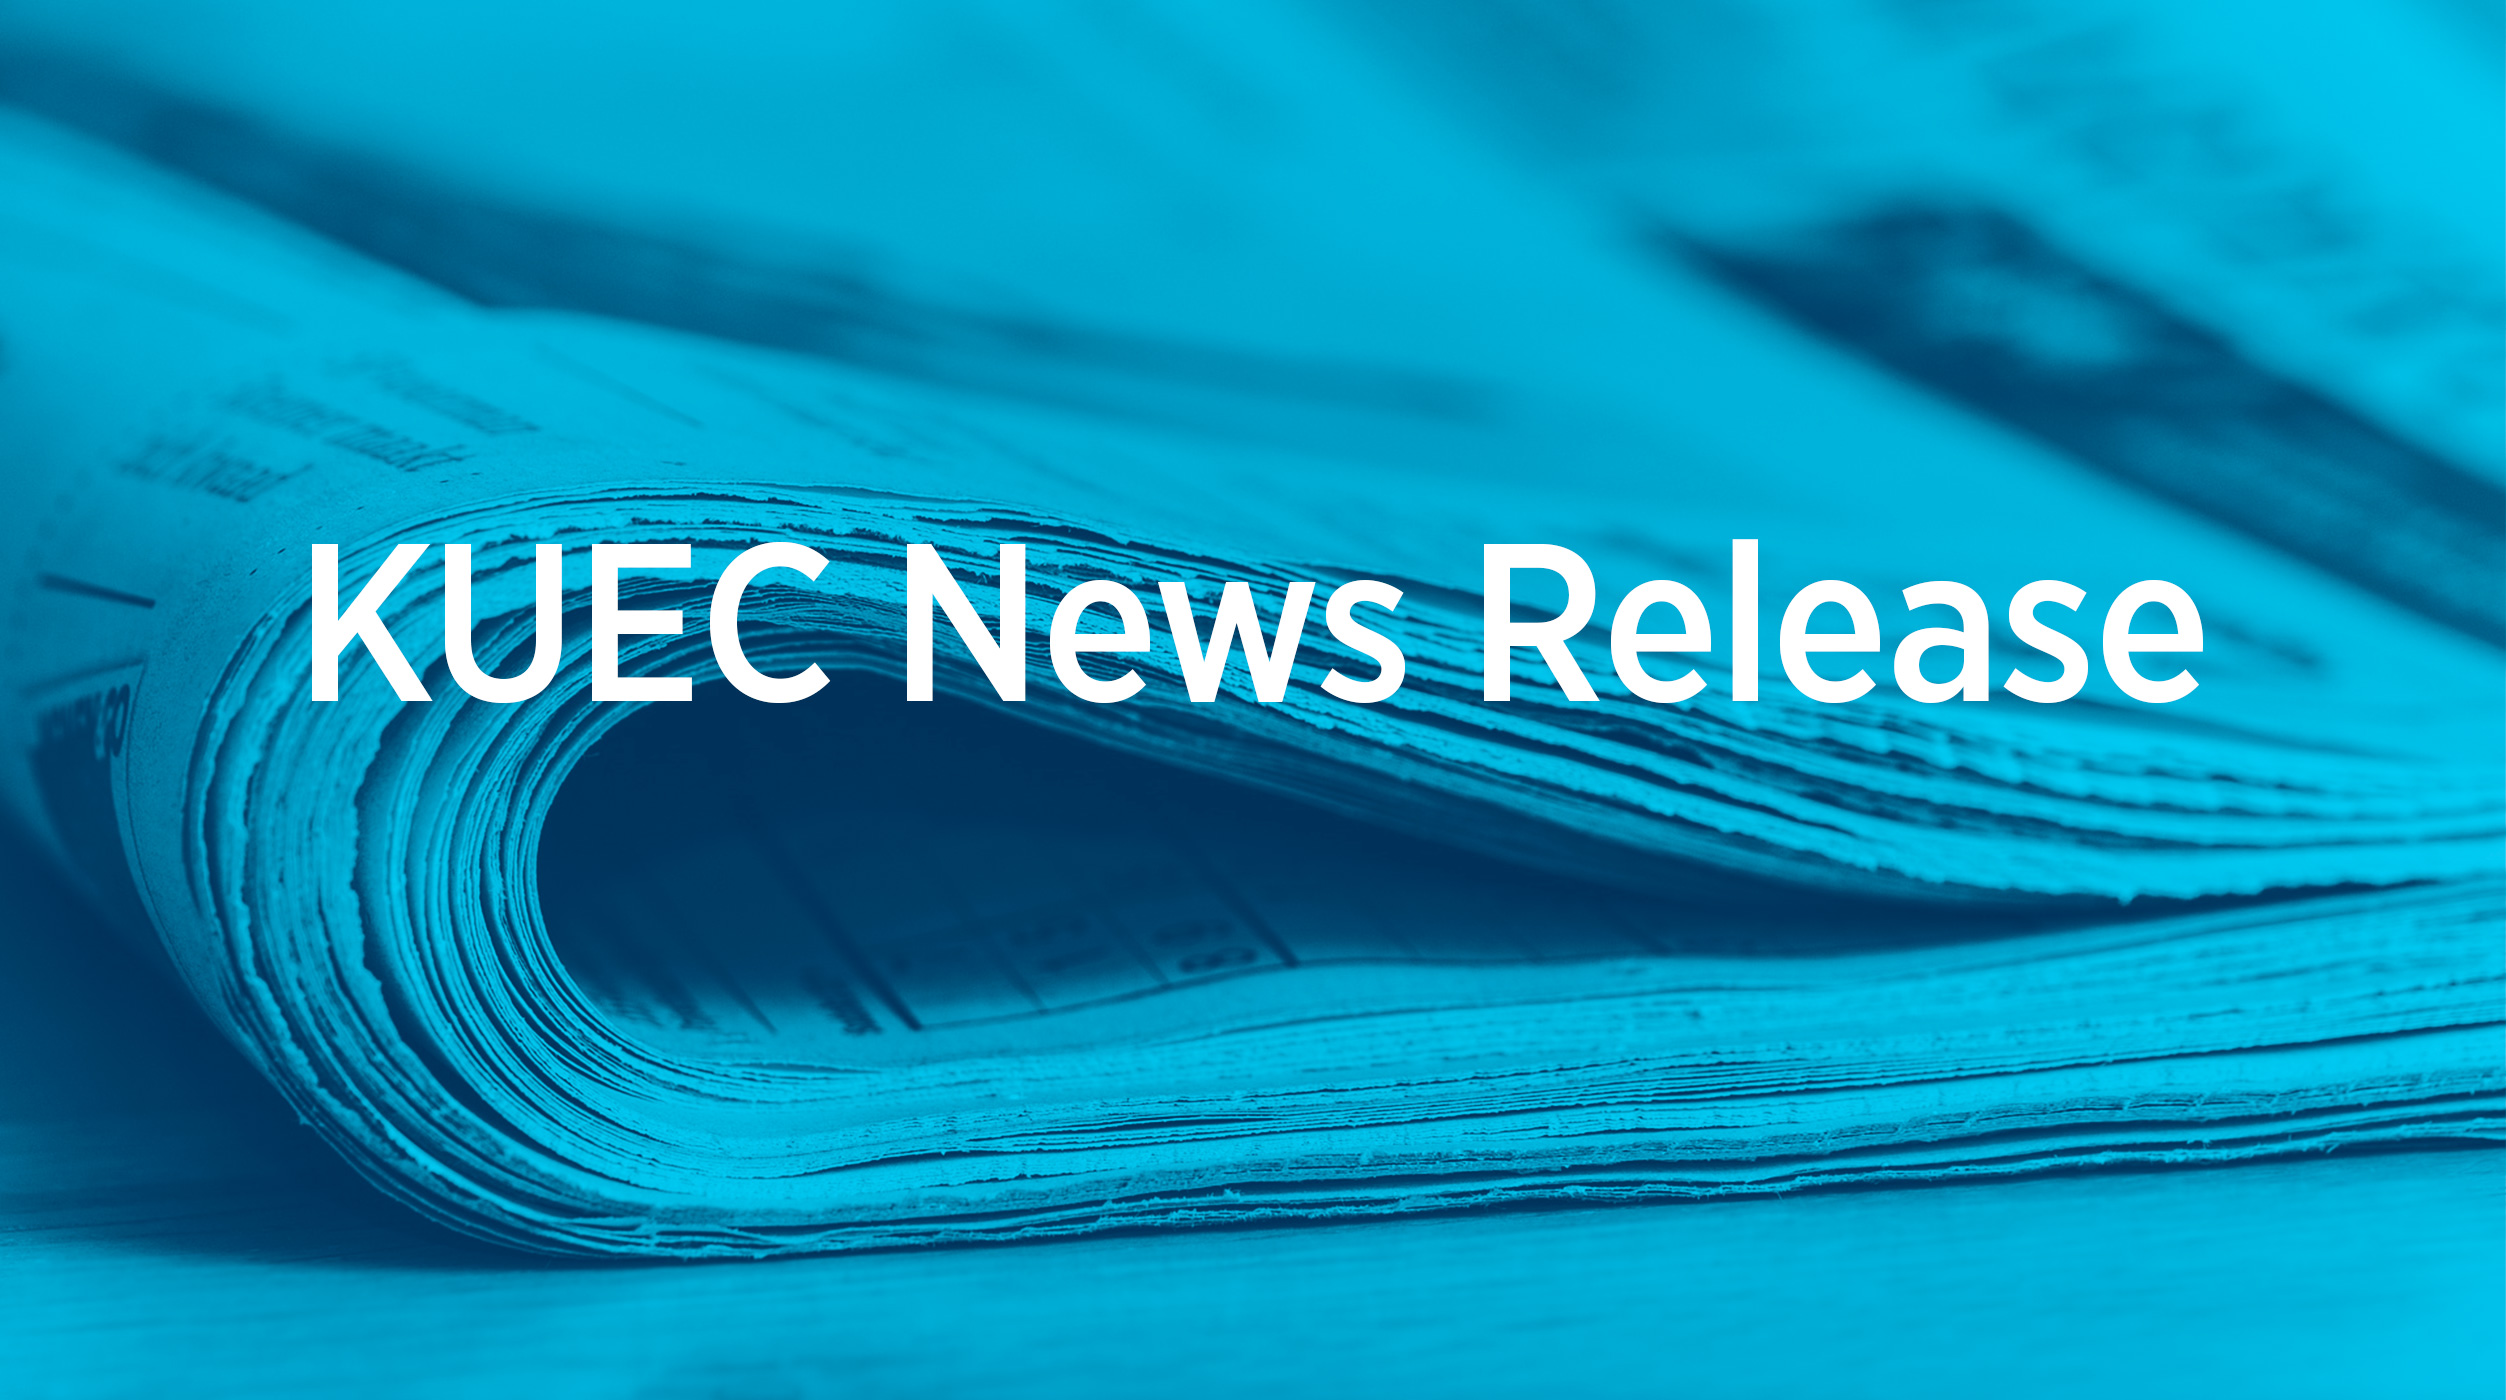 KUEC News Release